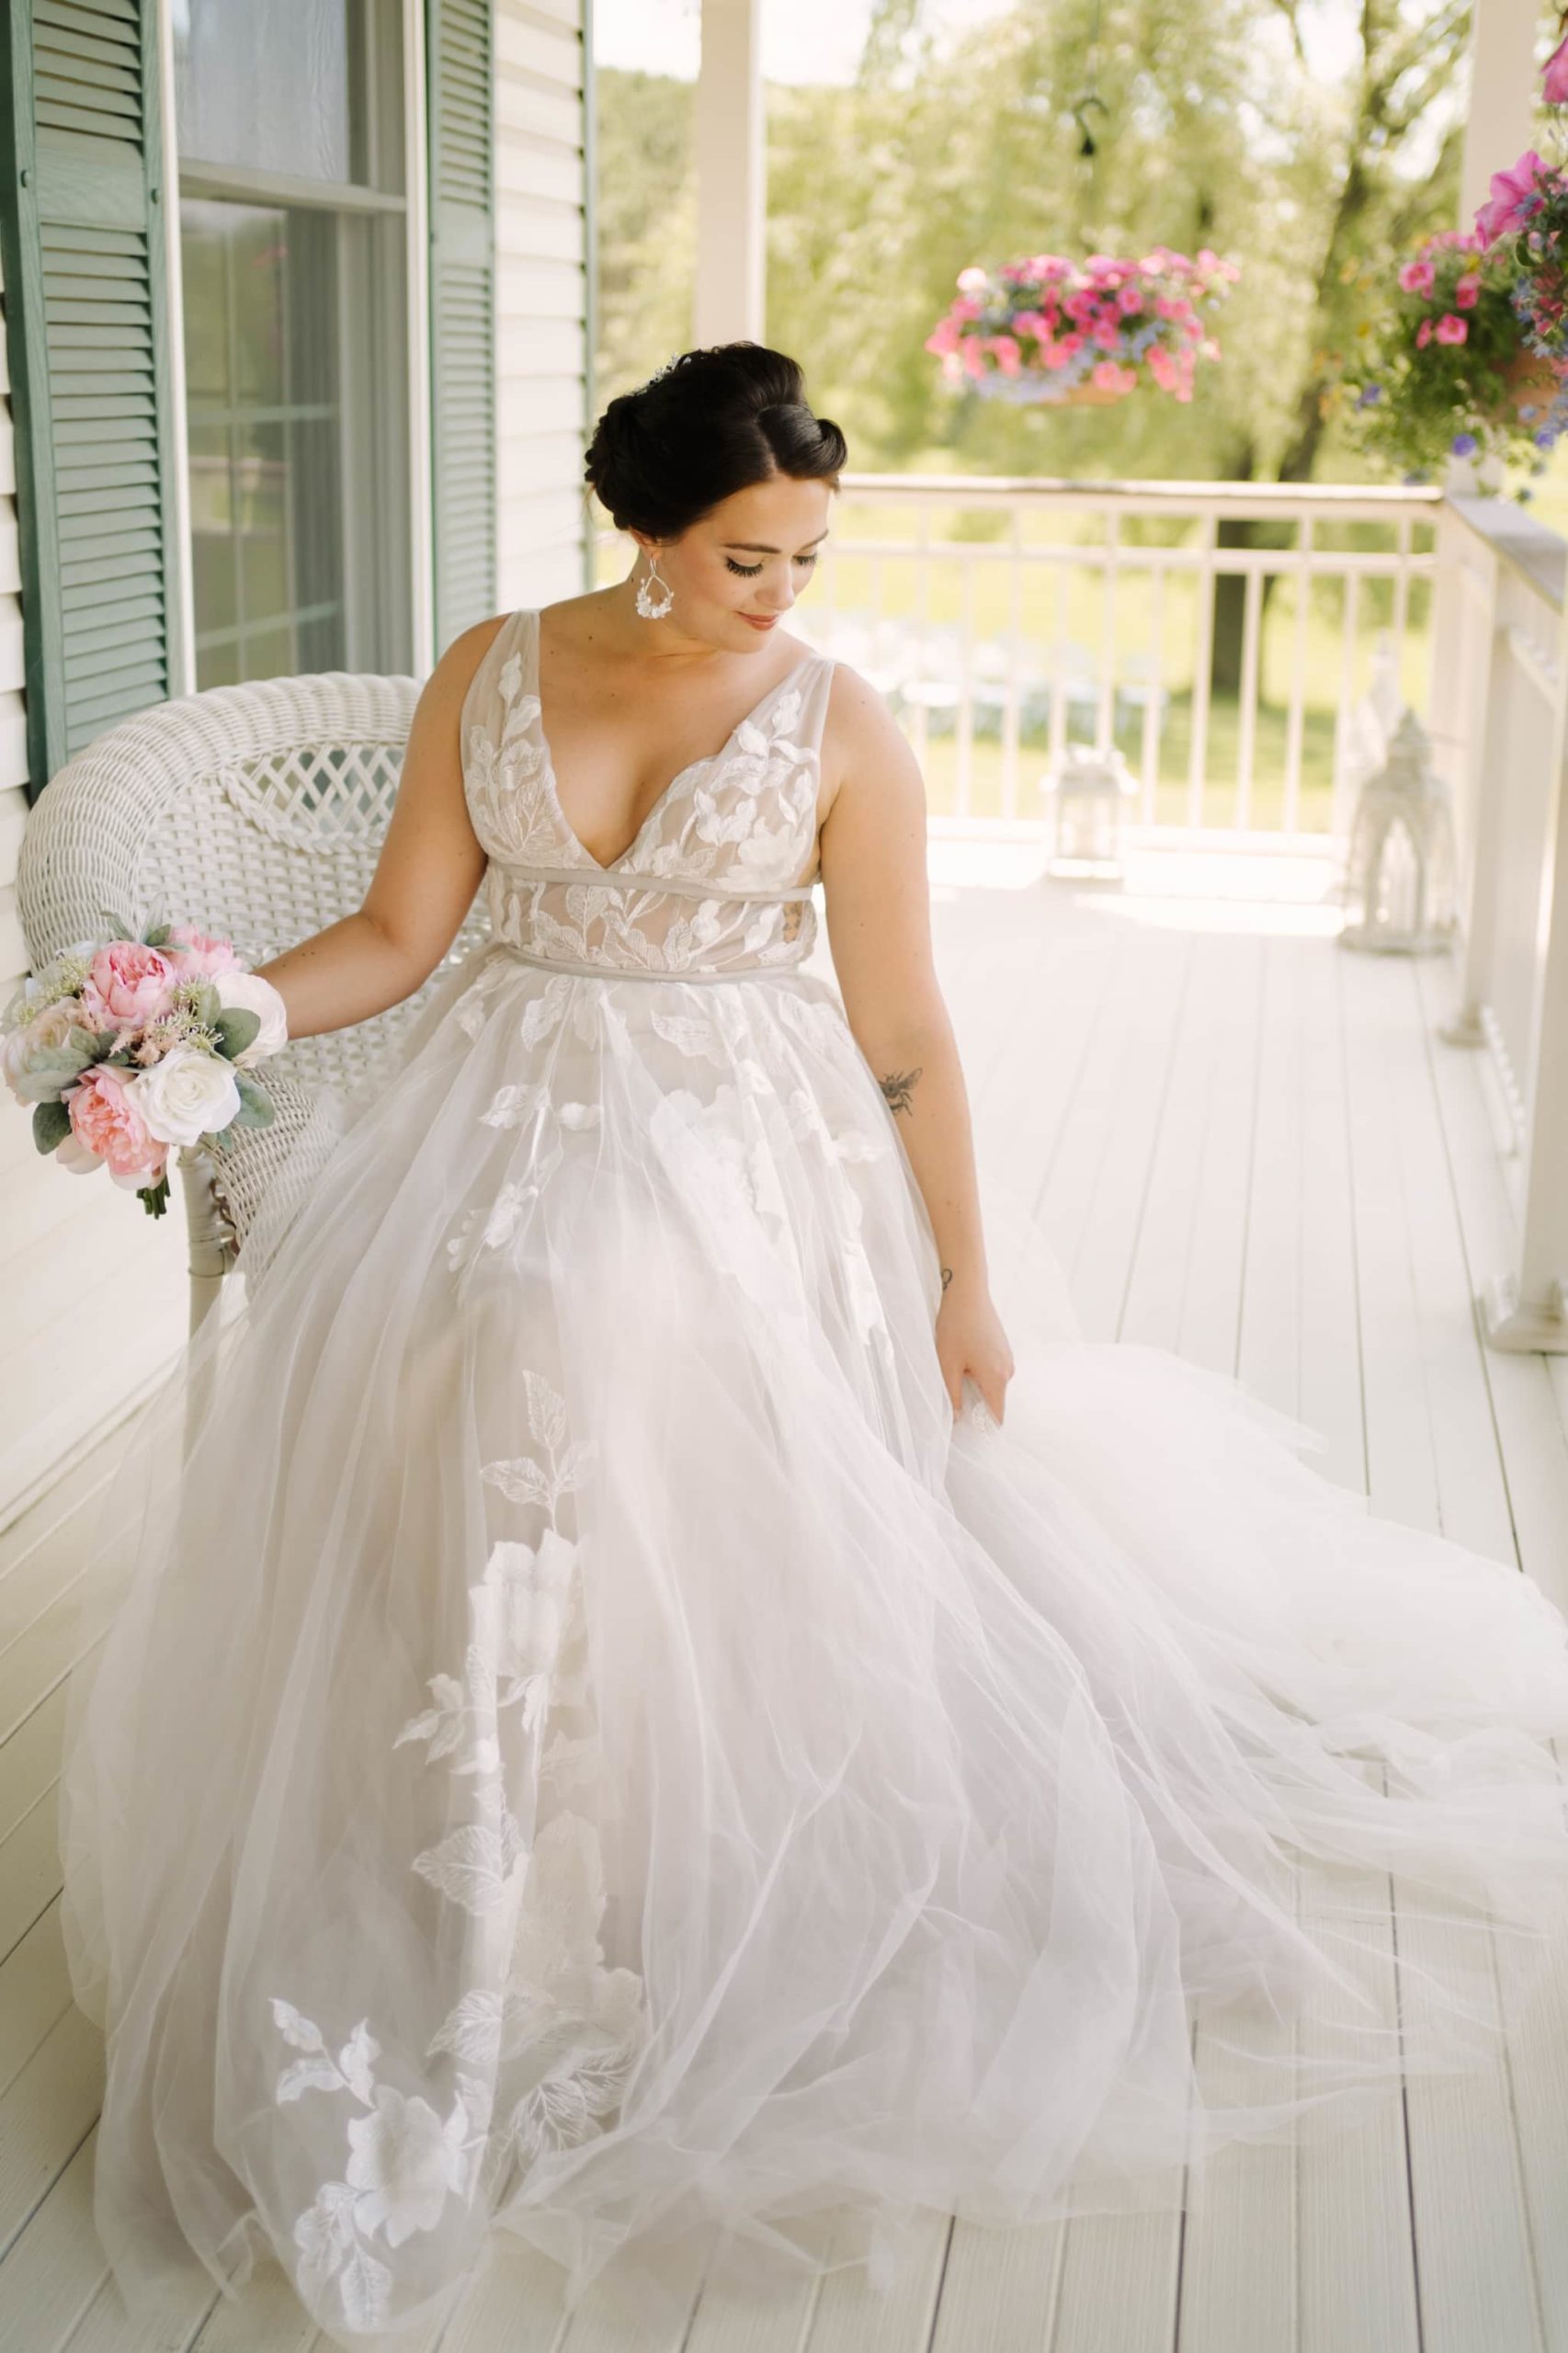 bride in flowing gauzy gown on homestead porch